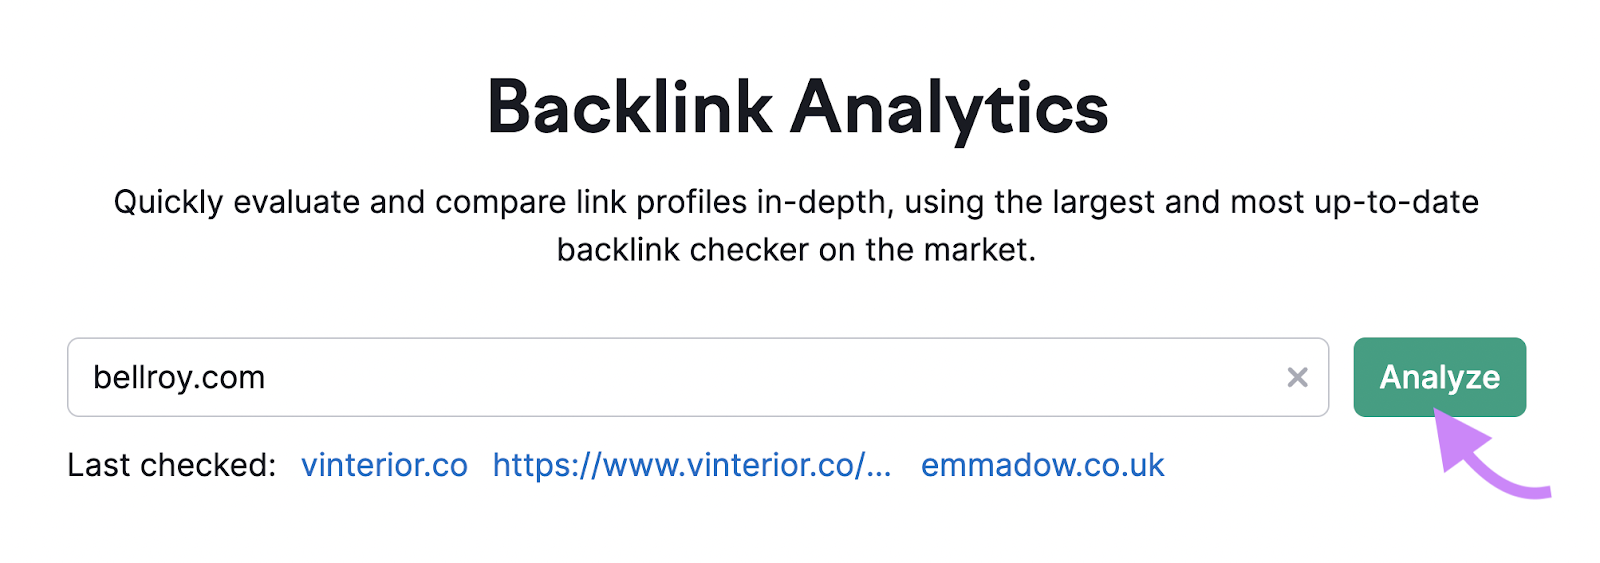 "bellroy.com" entered into the Backlink Analytics tool